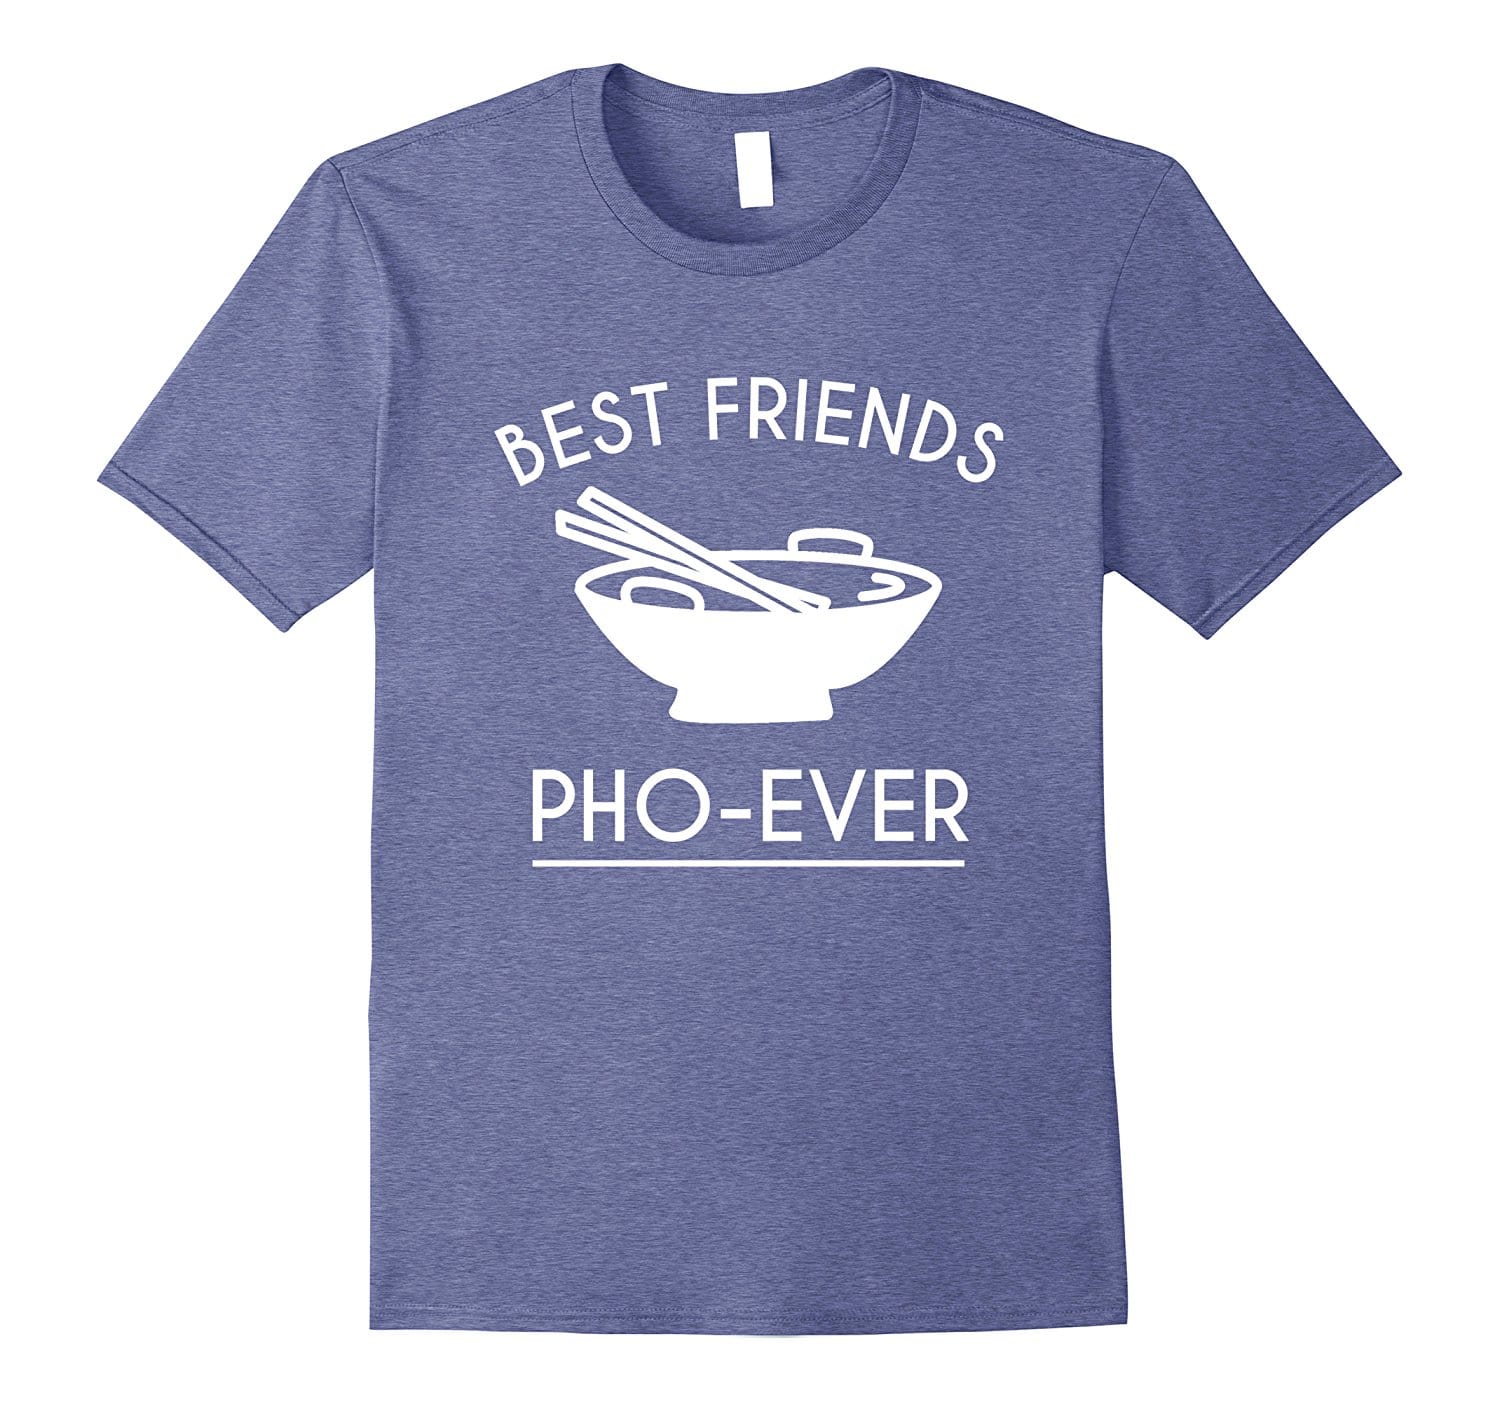 Funny Best Friend Shirts 2018: Best Friend Pho-Ever Pun Tee